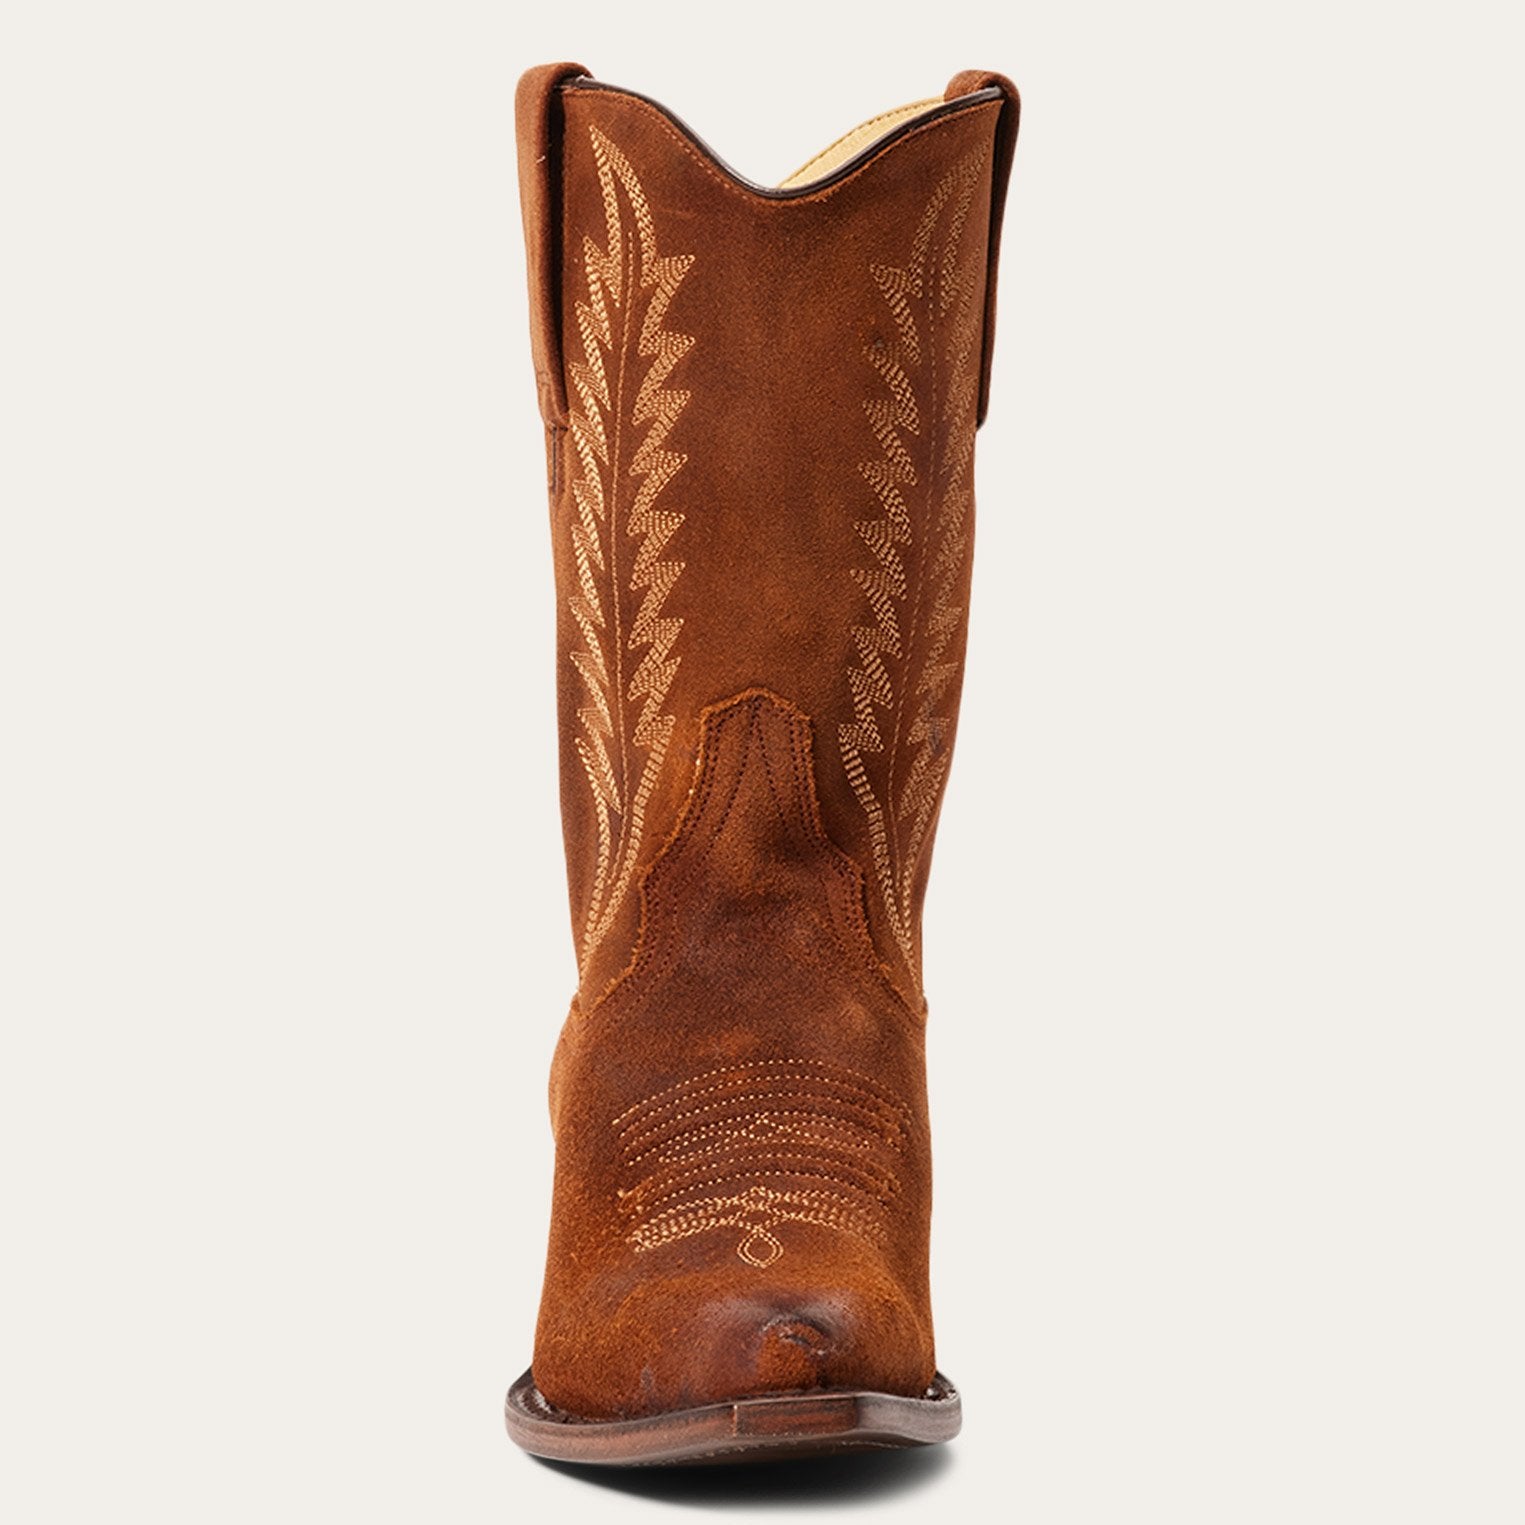 Abilene Men's Dress Western Boots - Square Toe